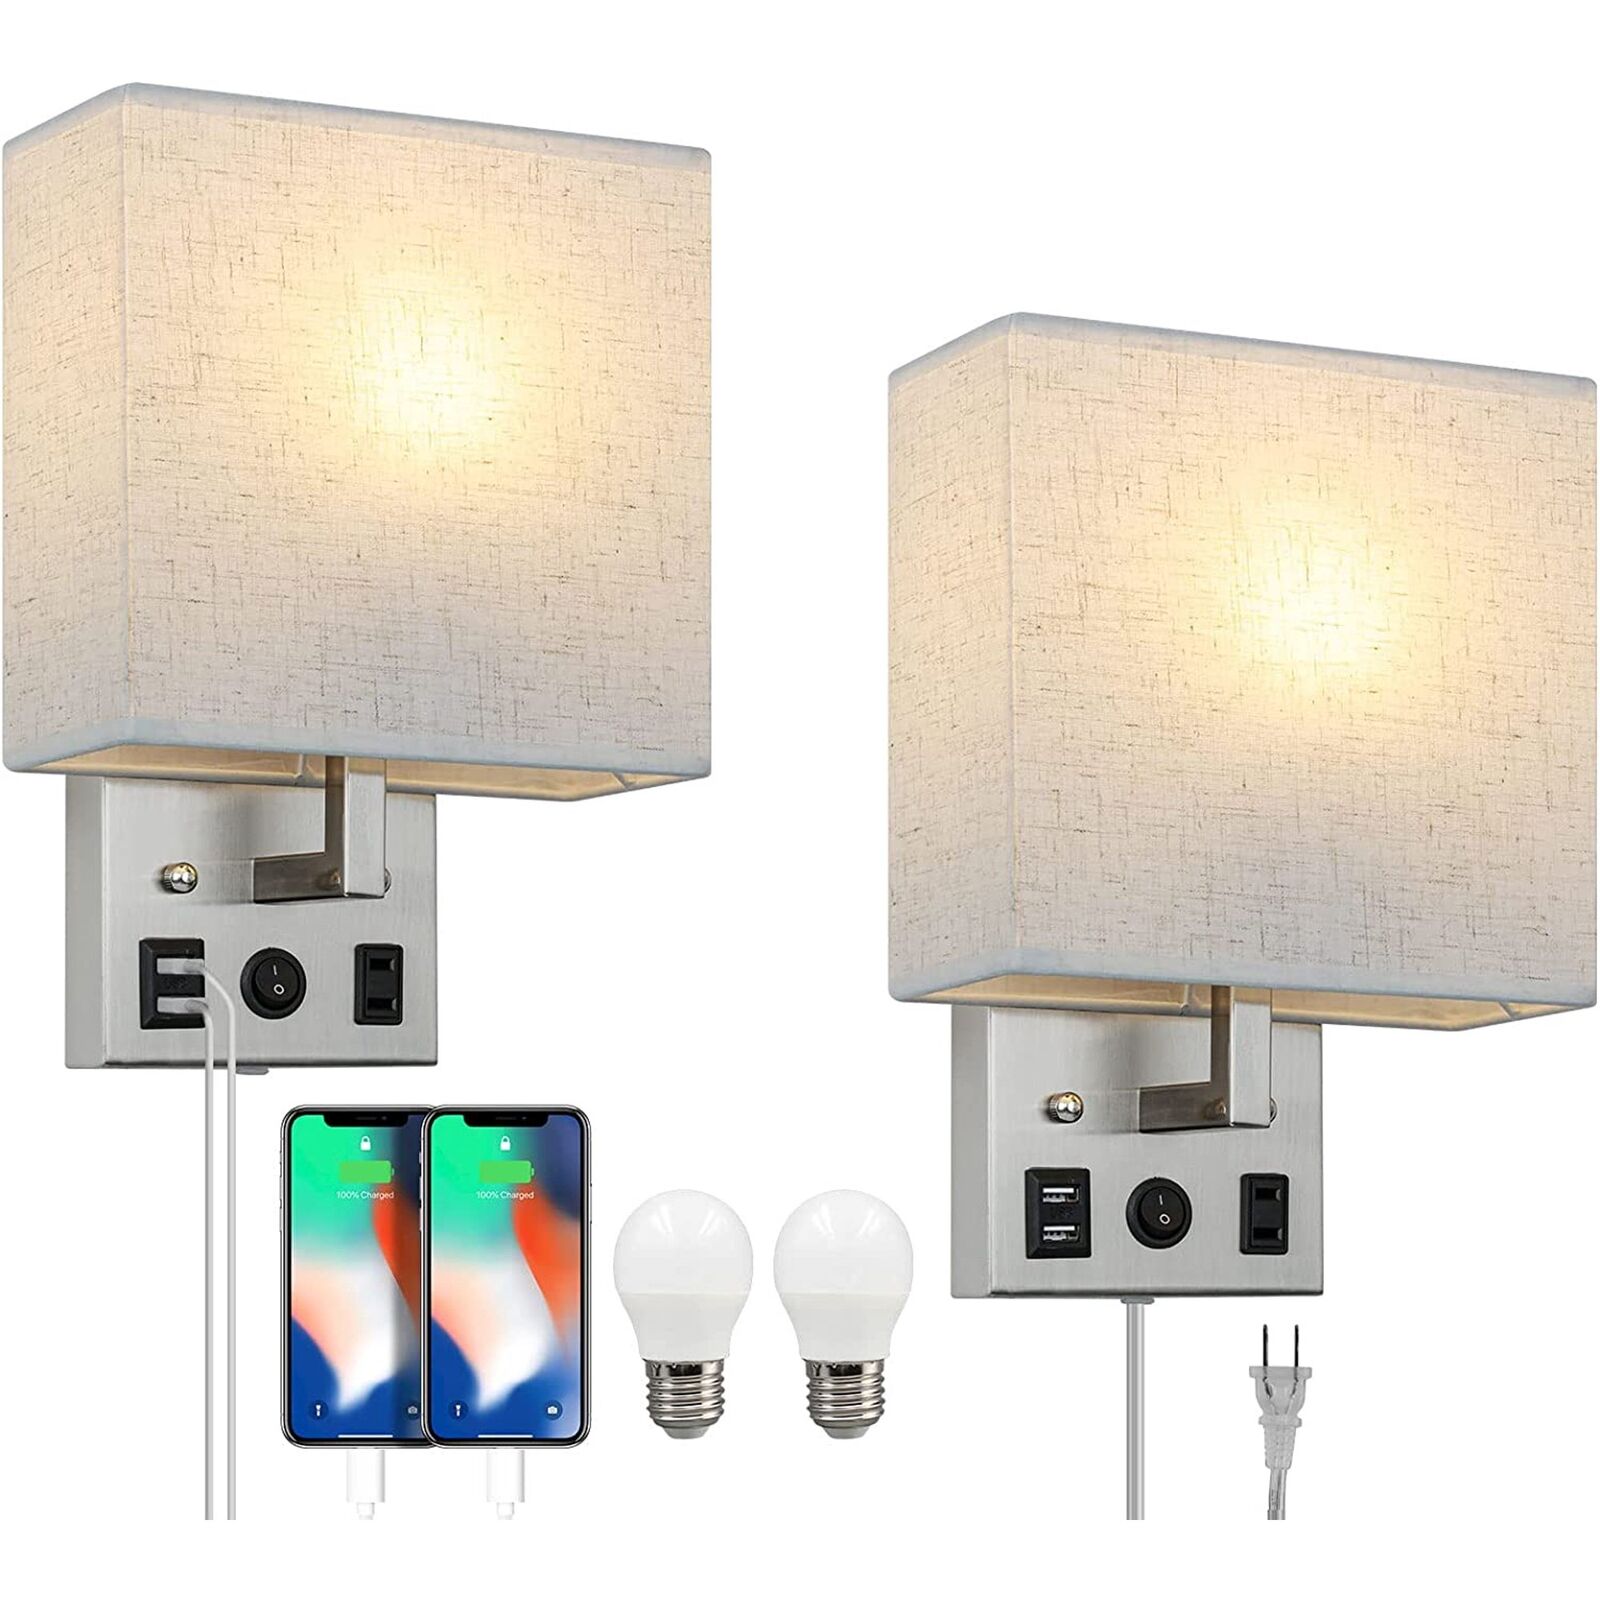 Modern 2 Pack Wall Sconce Lamp Plug in Lighting Fixture Vanity Wall Fixtures